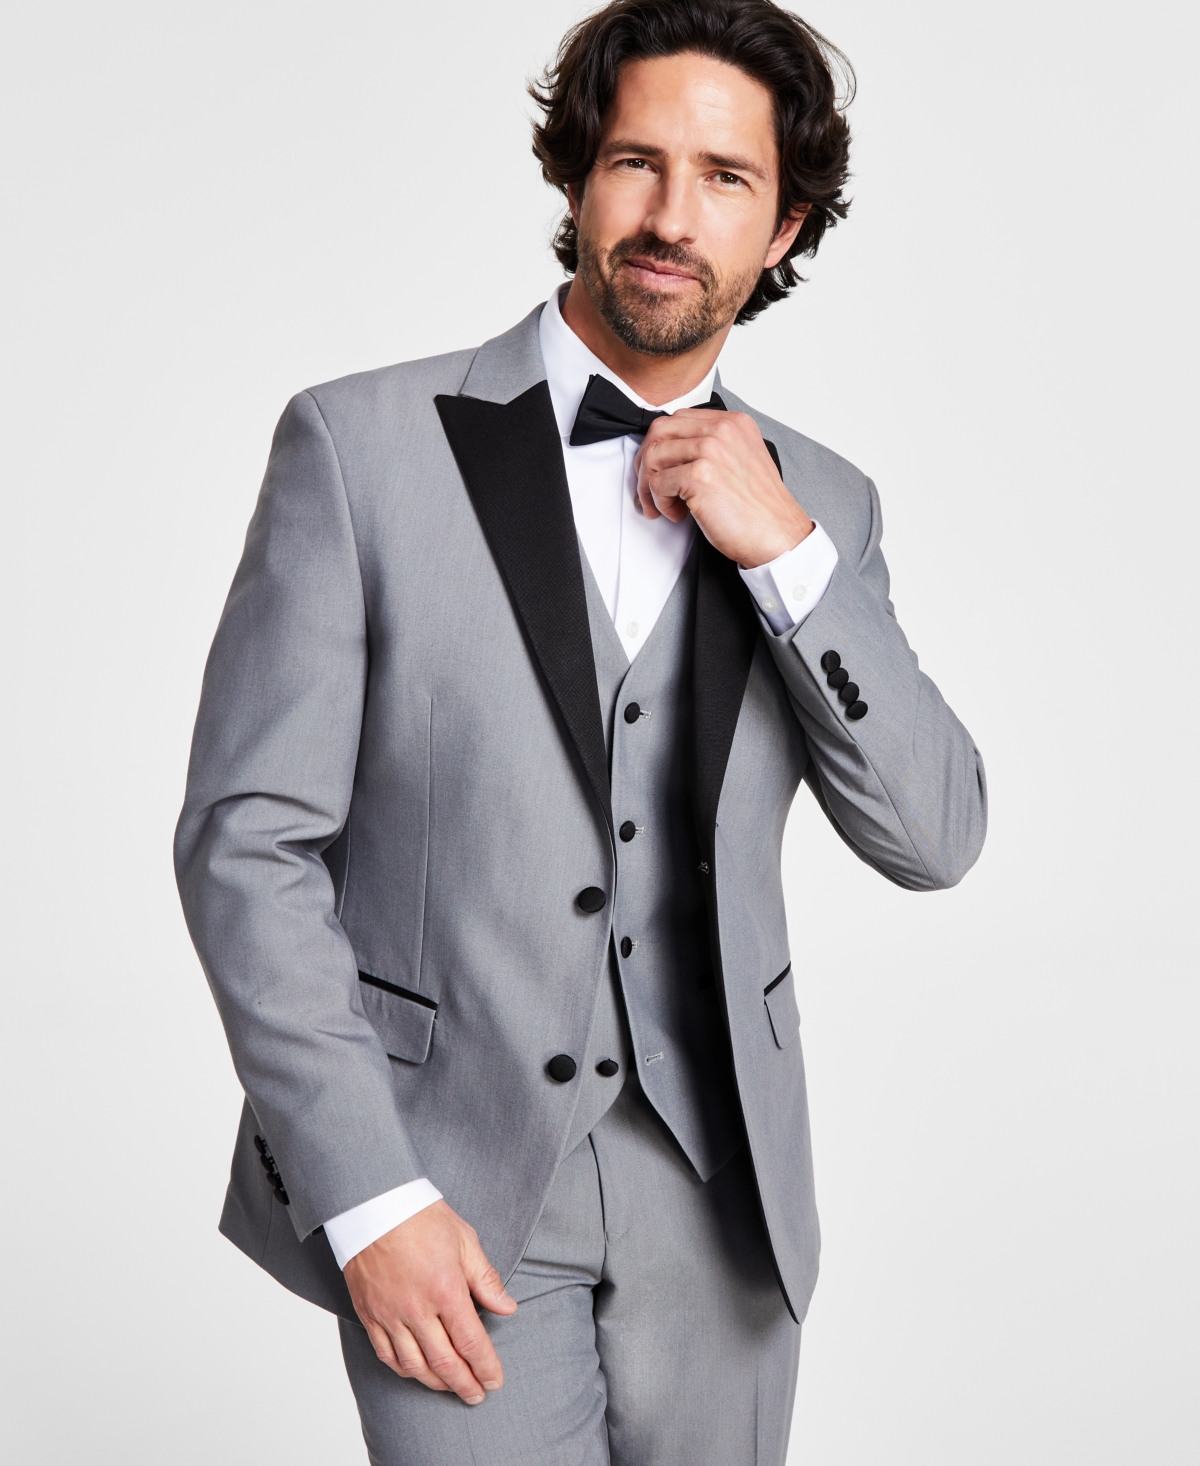 Alfani Men's Slim-Fit Tuxedo Jacket (Light Grey or Dusty Rose) $63 + Free Shipping